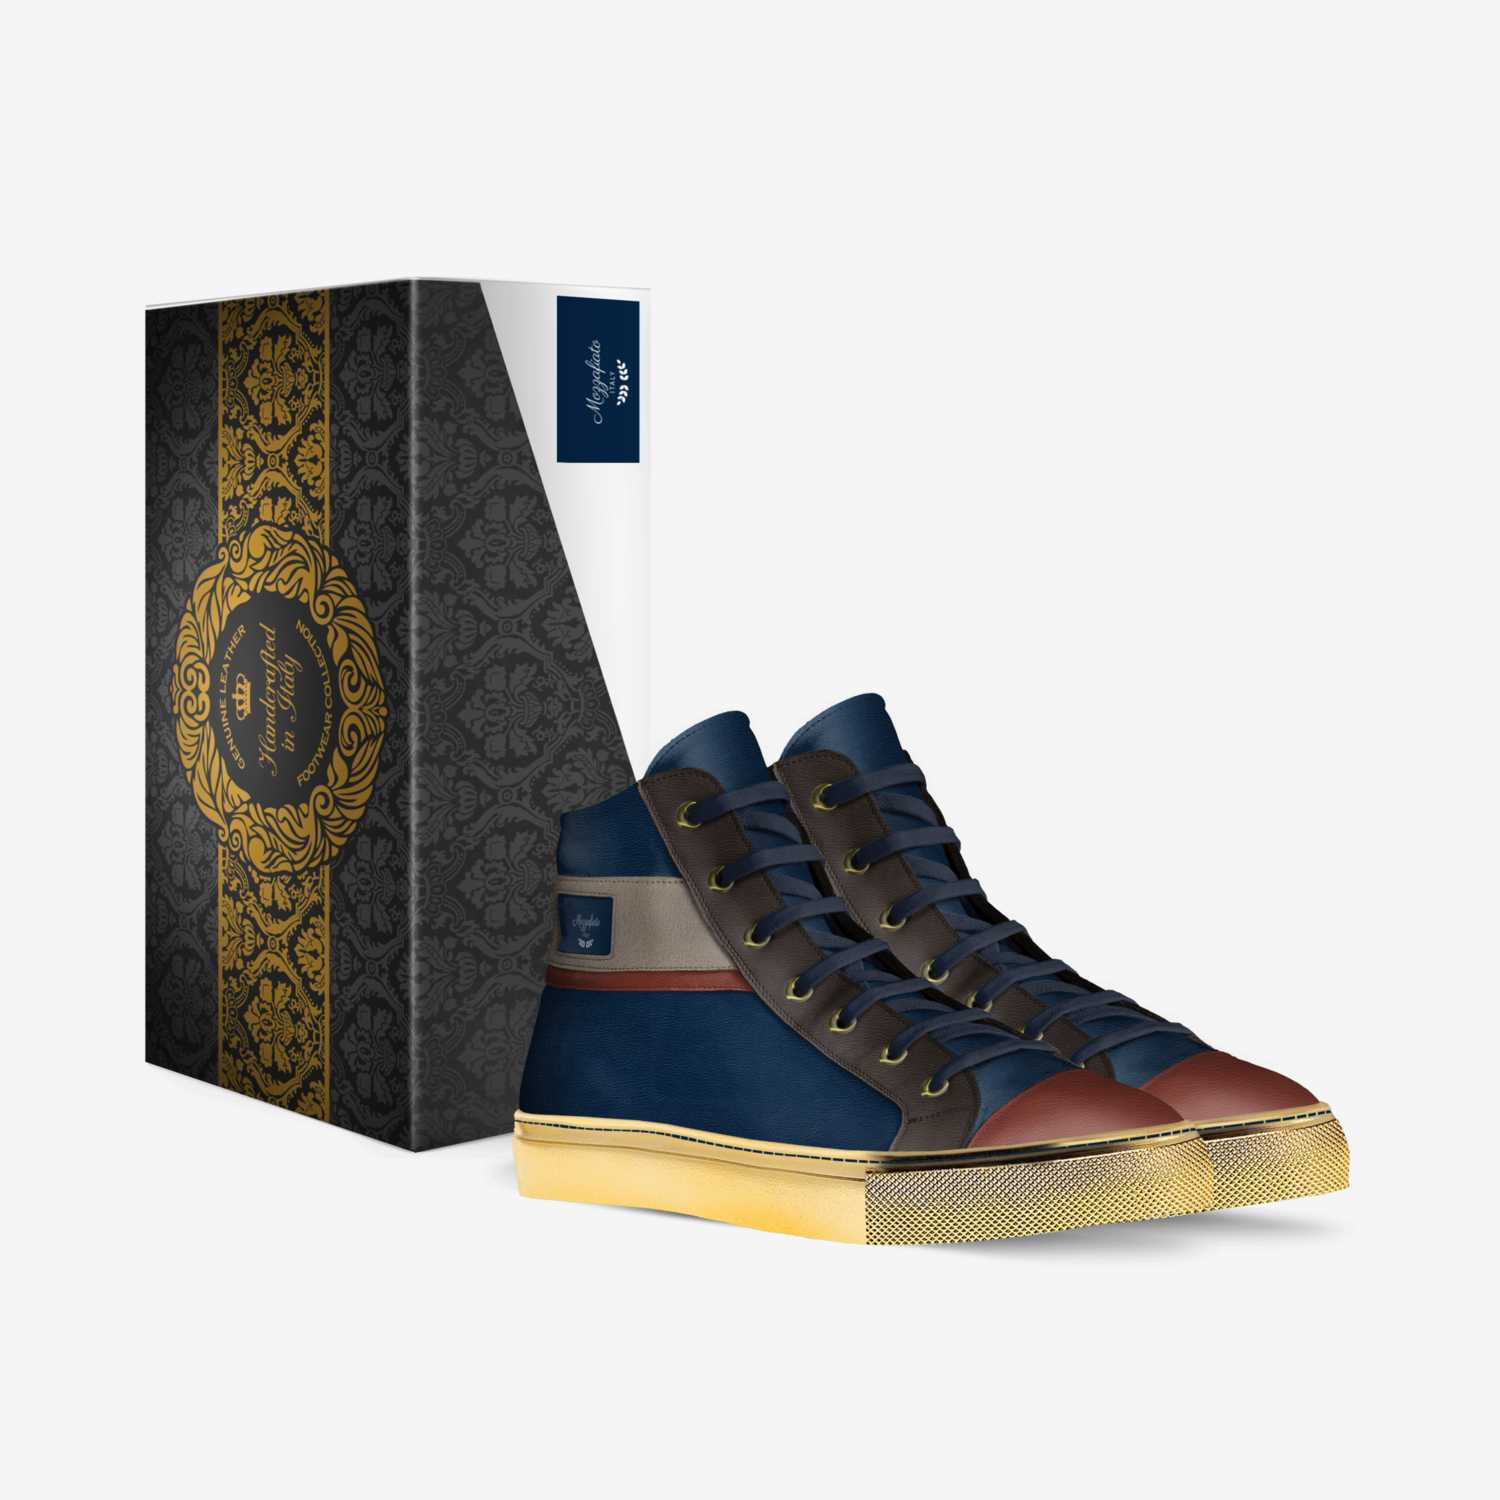 Mozzafiato custom made in Italy shoes by Uno Hunnito | Box view